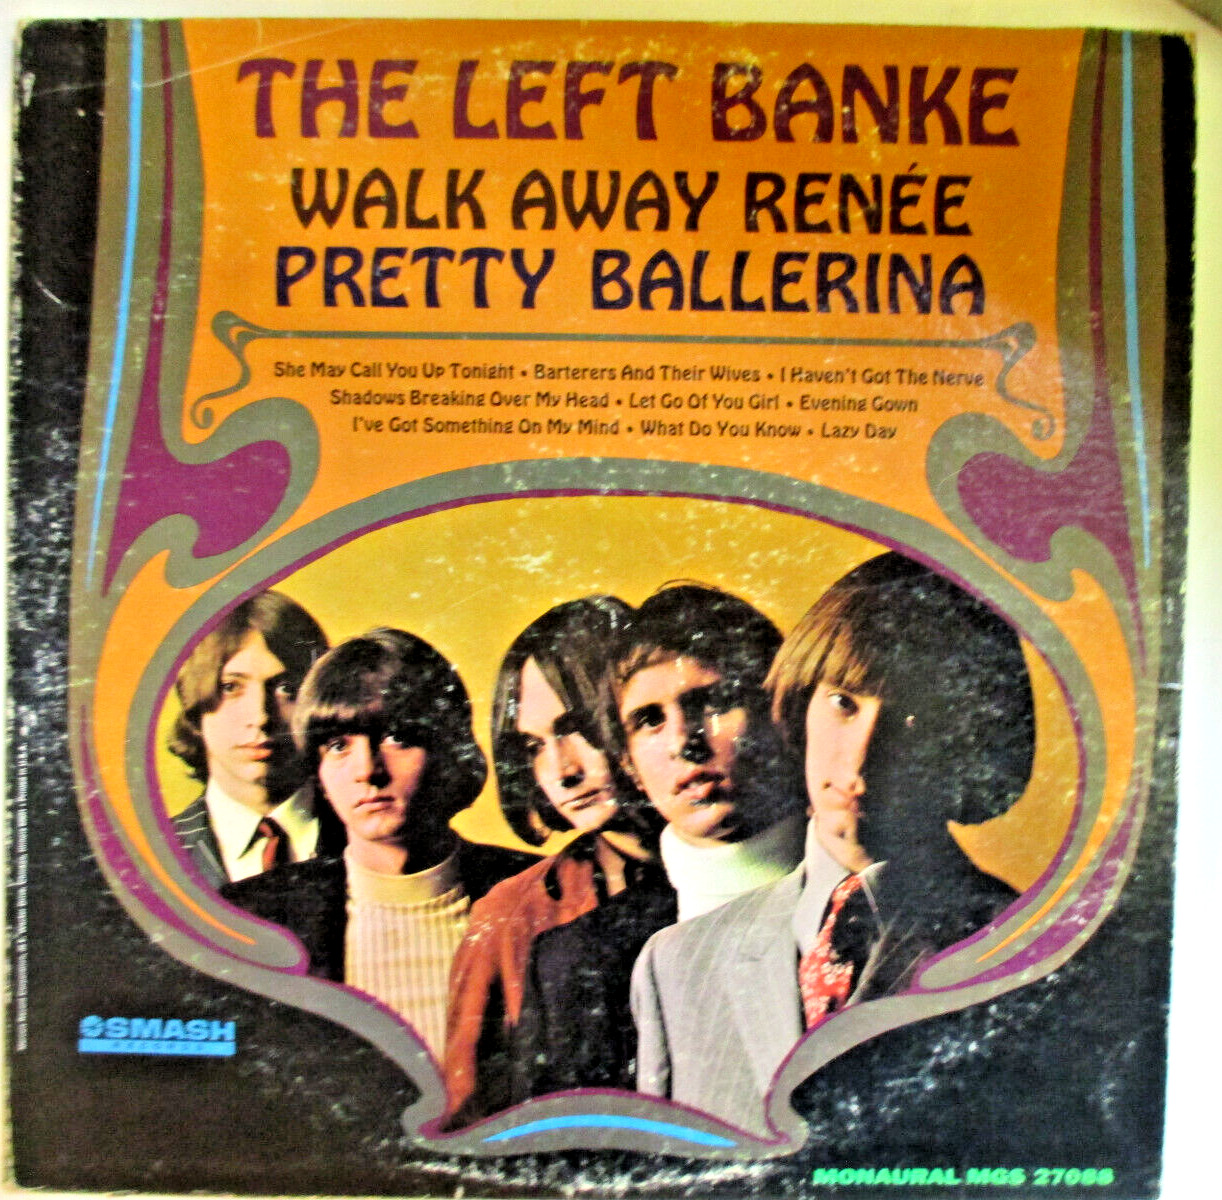 Vinyl LP THE LEFT BANKE Walk Away Renee / Pretty Ballerina Smash 27088 Mono 1966